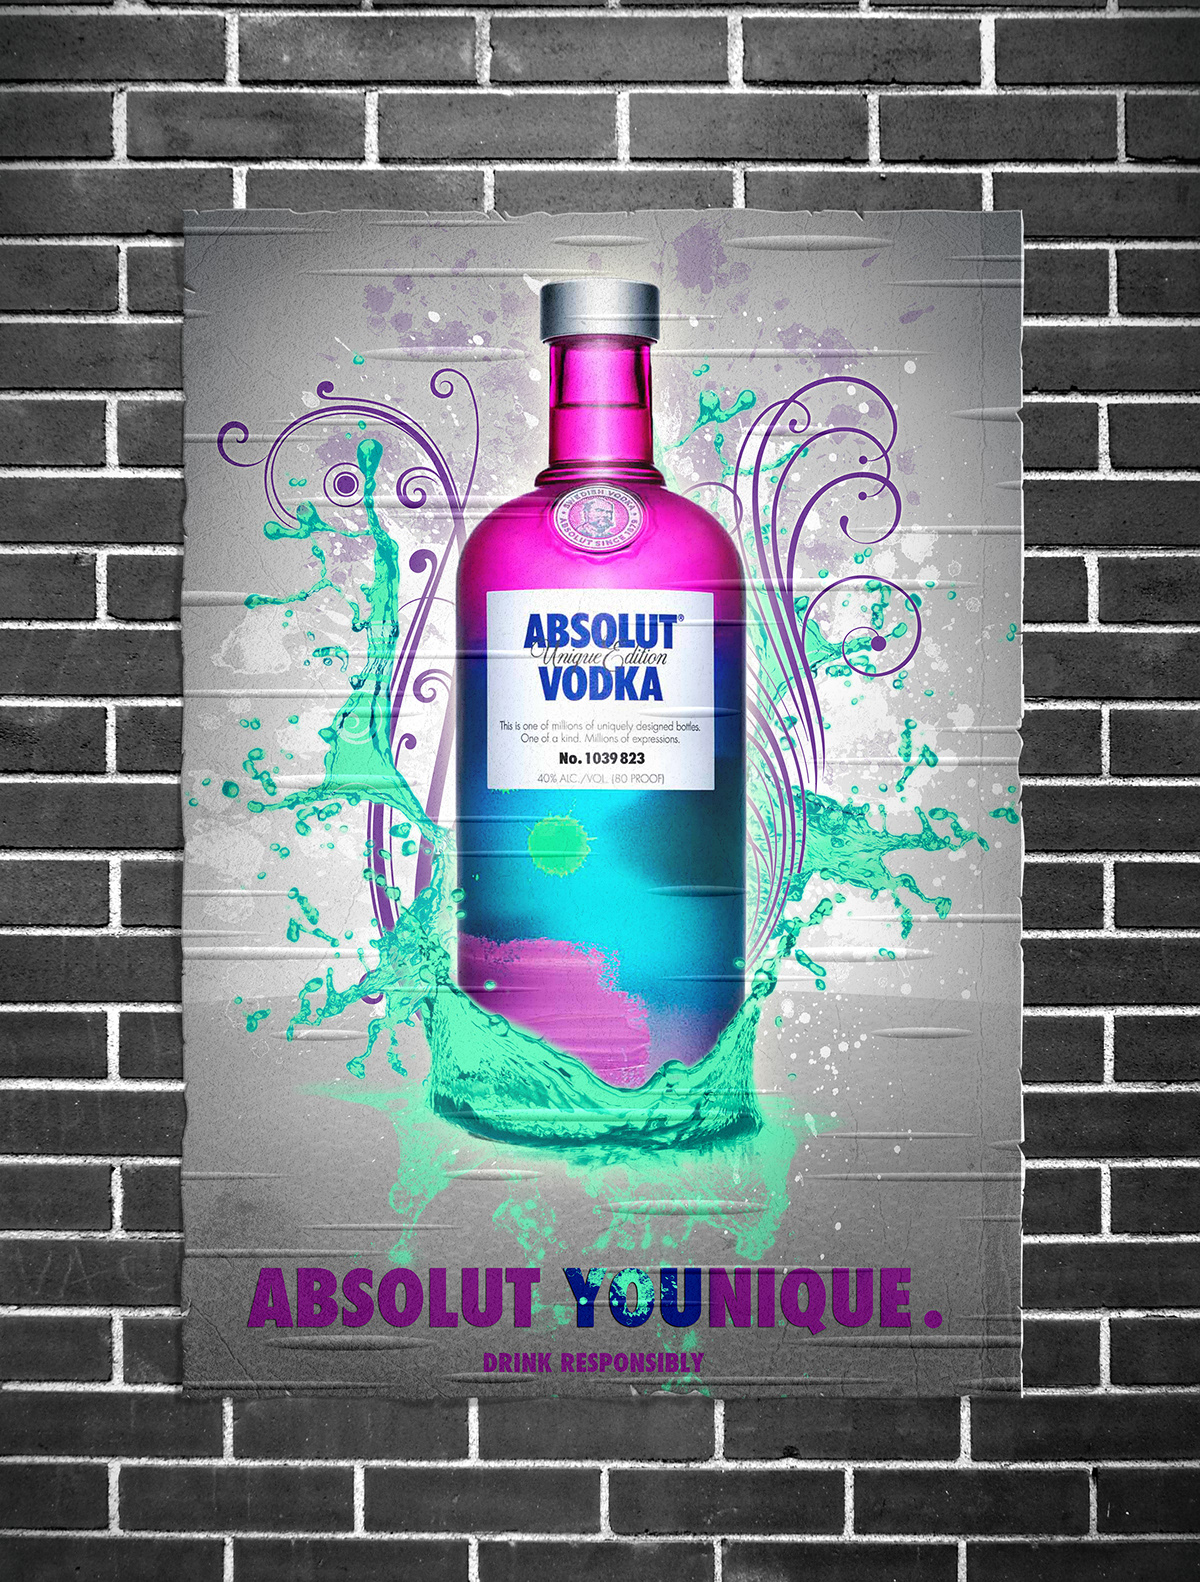 Absolut vodka Unique limited edition poster